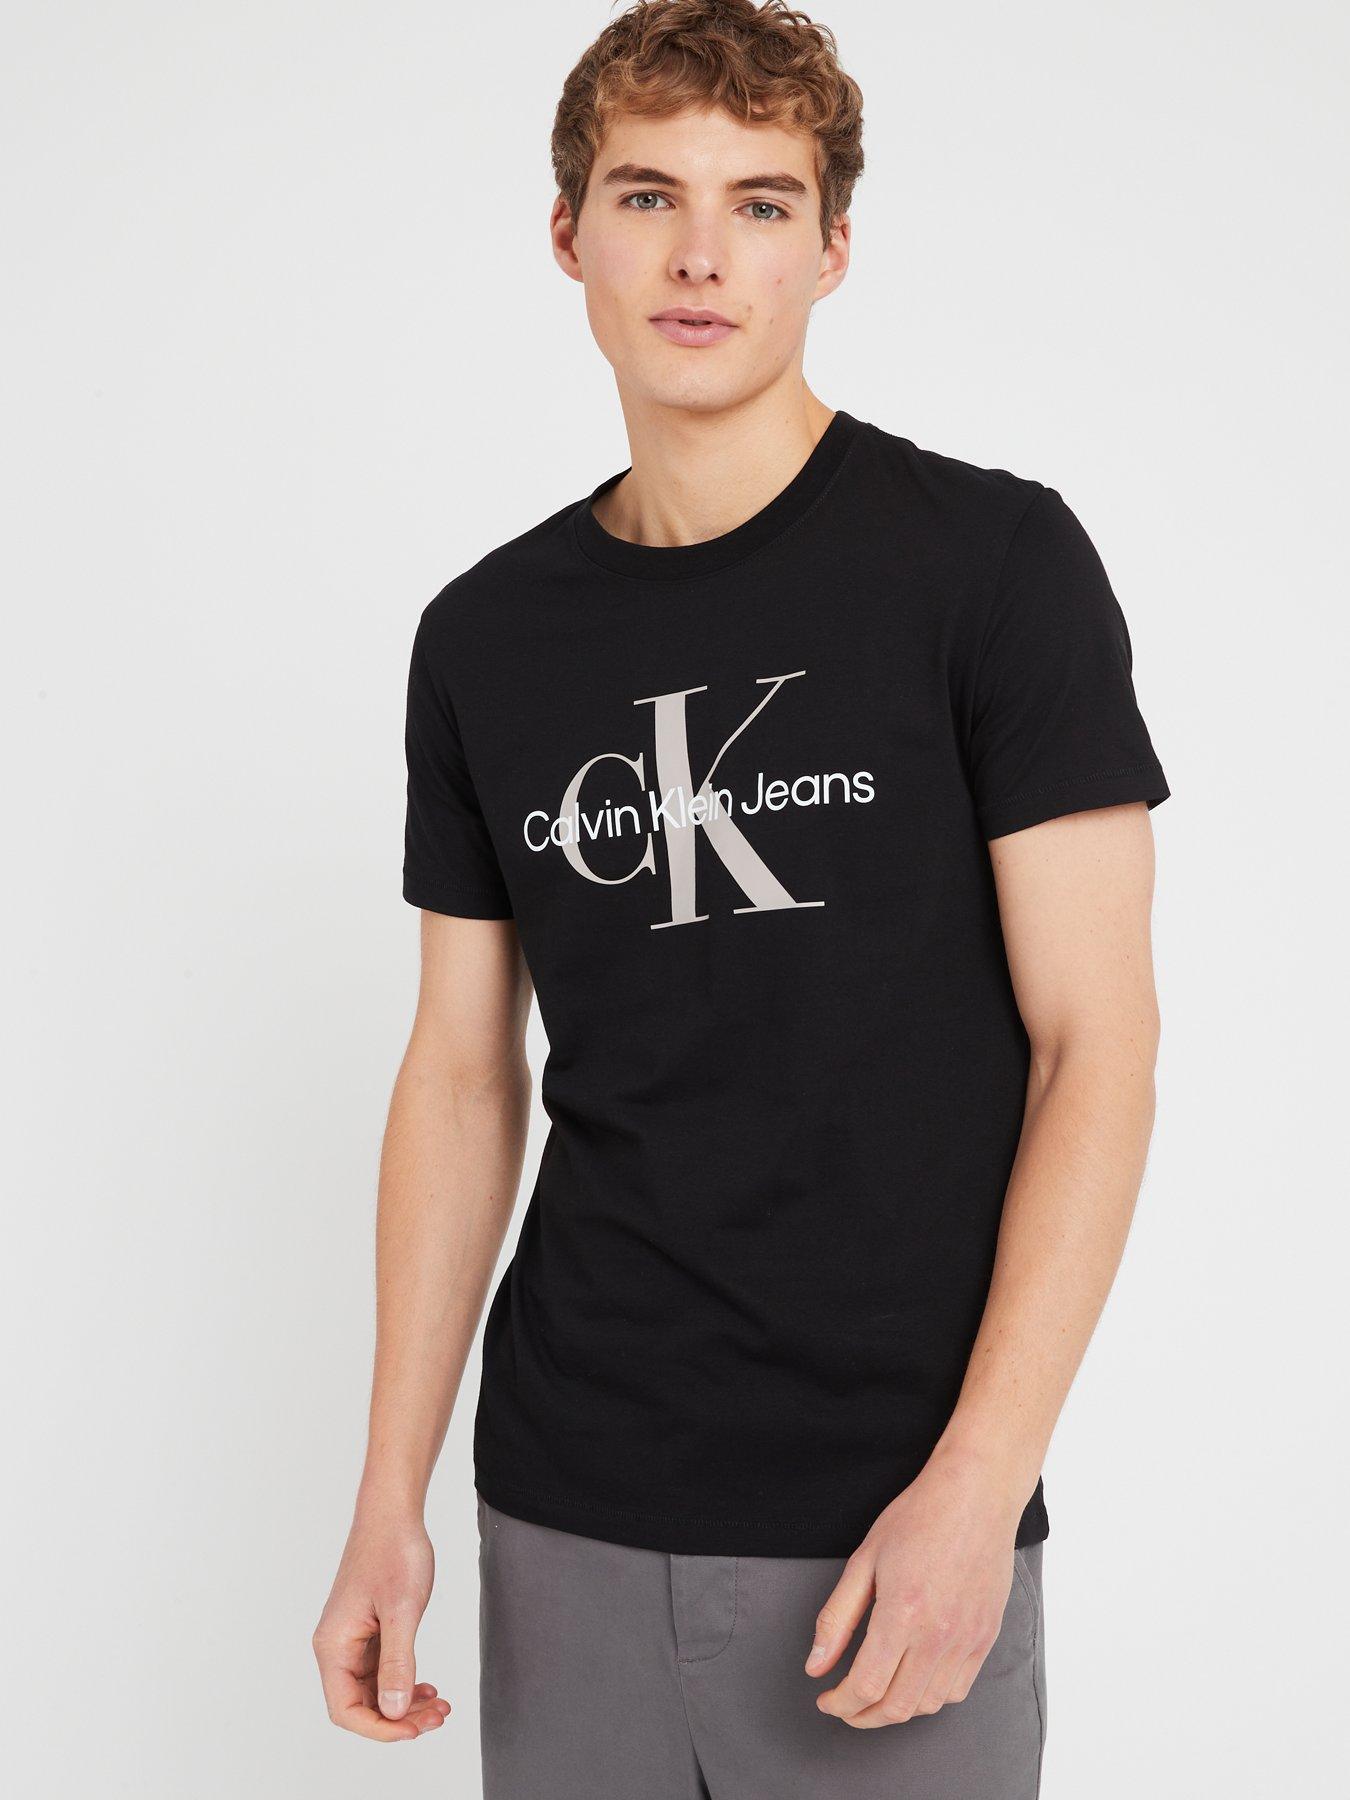 | Very Black | | klein T-shirts Ireland polos Calvin & | Men